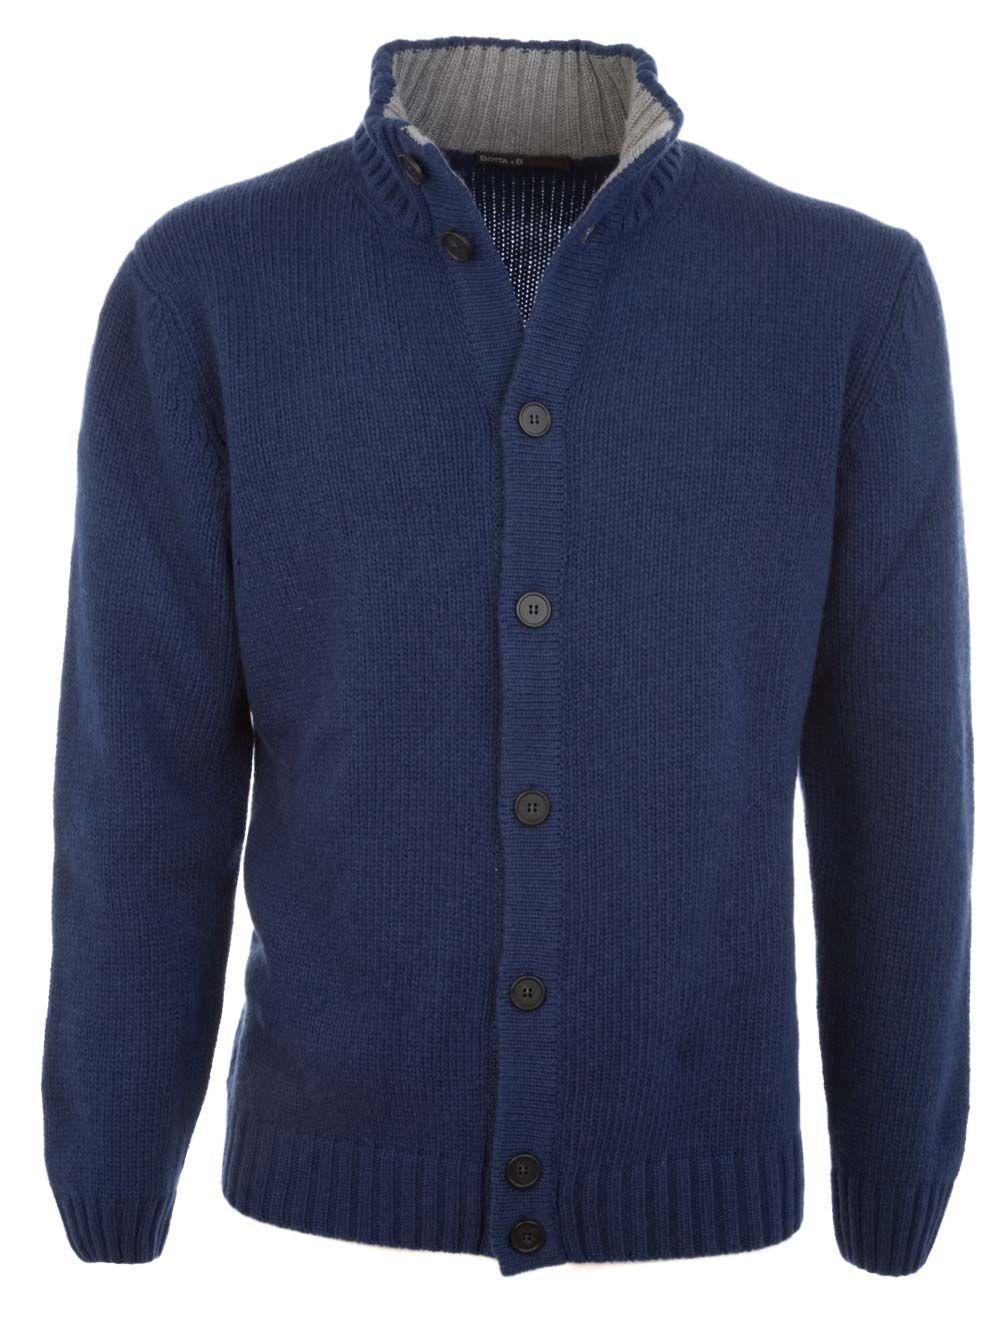 Ones Blue Wool Cardigan in Blue for Men - Lyst